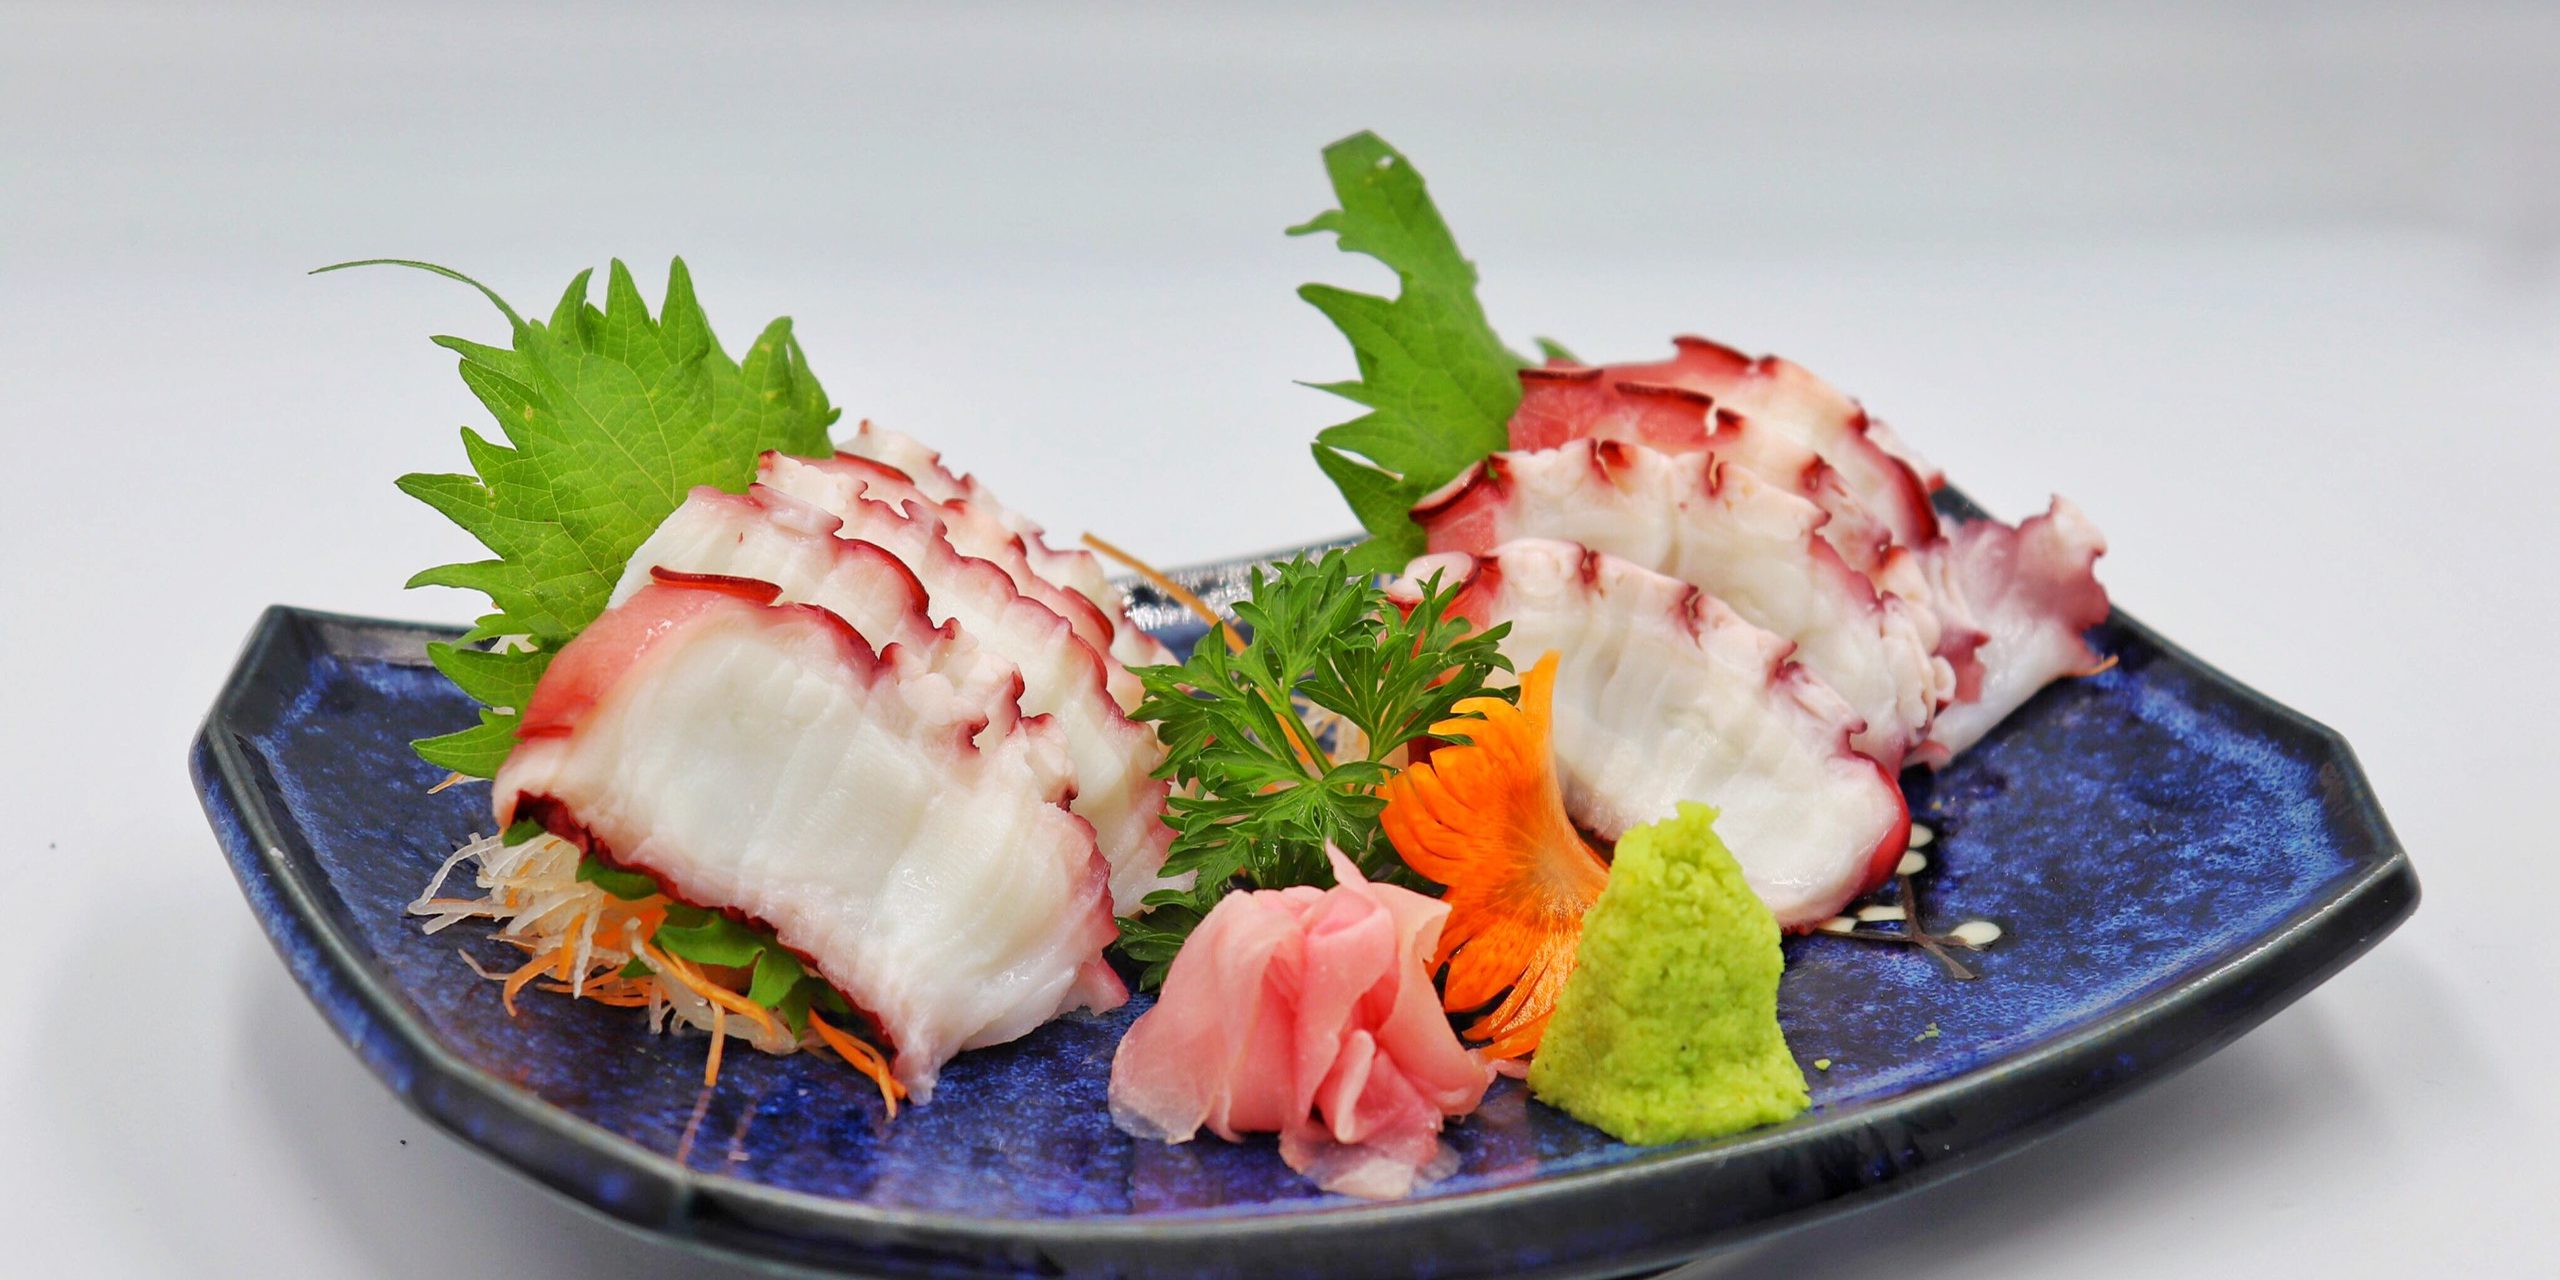 Sashimi bạch tuộc